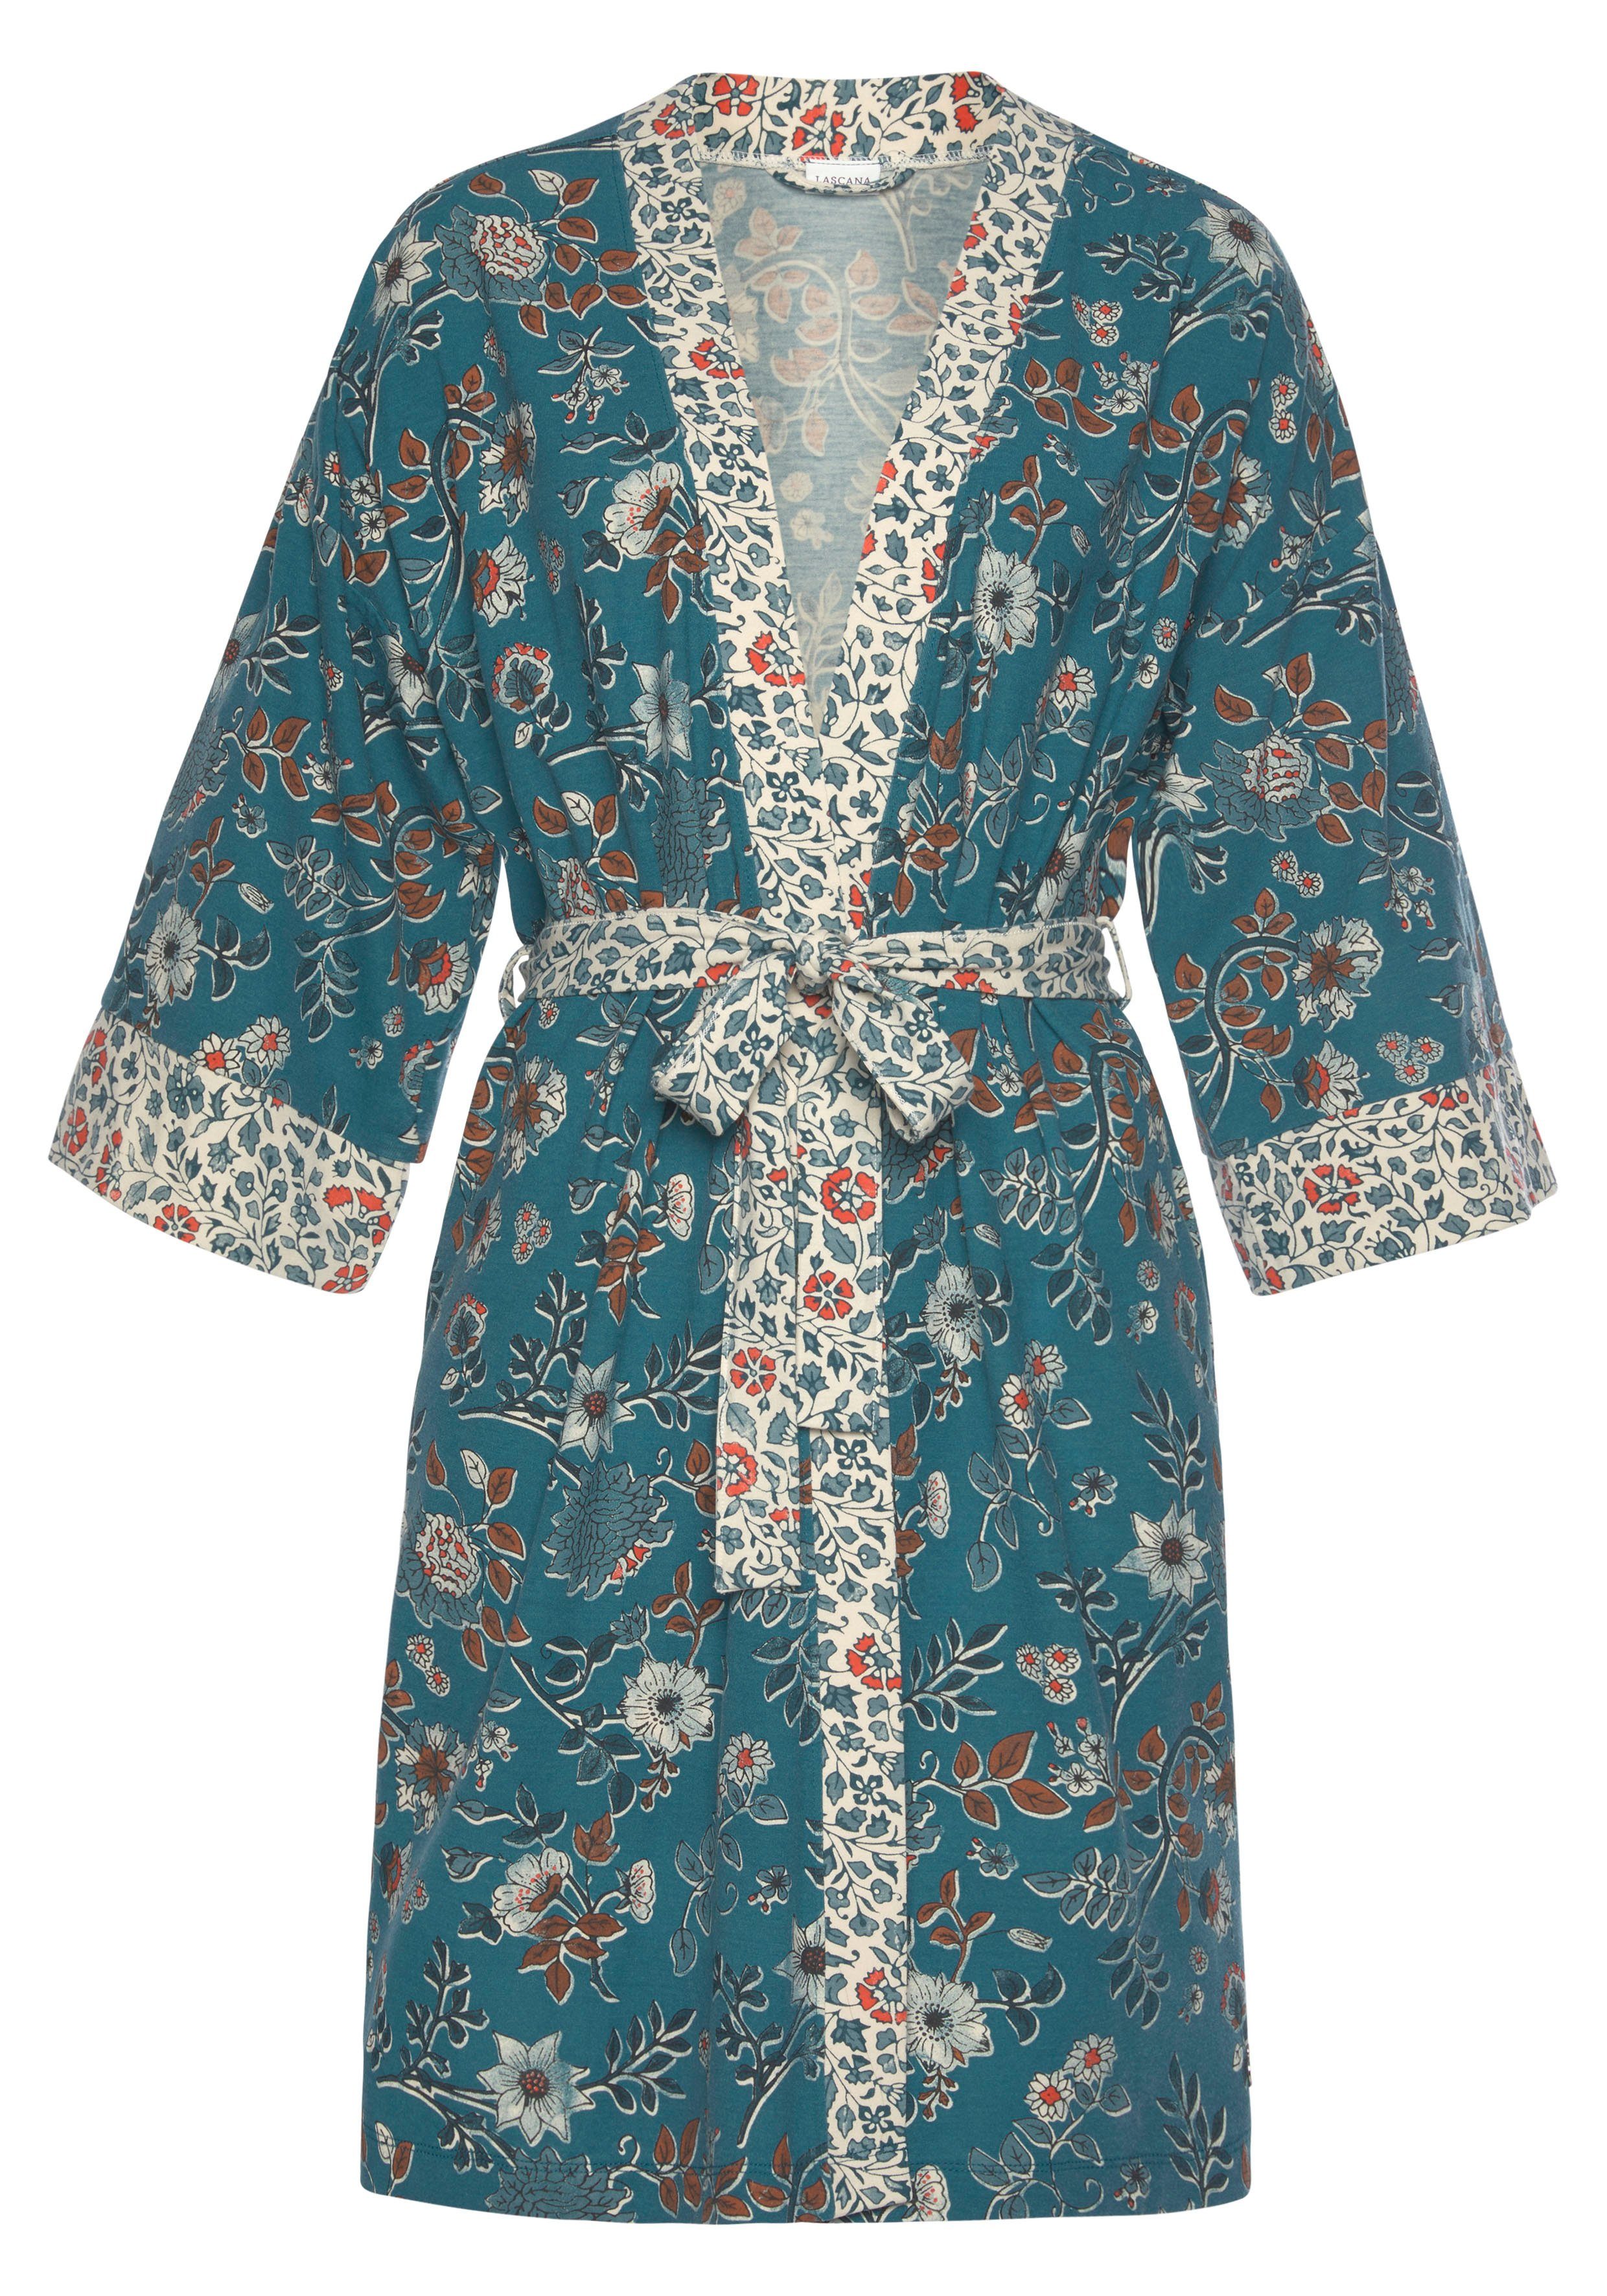 Allover-Druck Blumen Gürtel, Kimono-Kragen, Kurzform, LASCANA Jersey, mit Kimono,